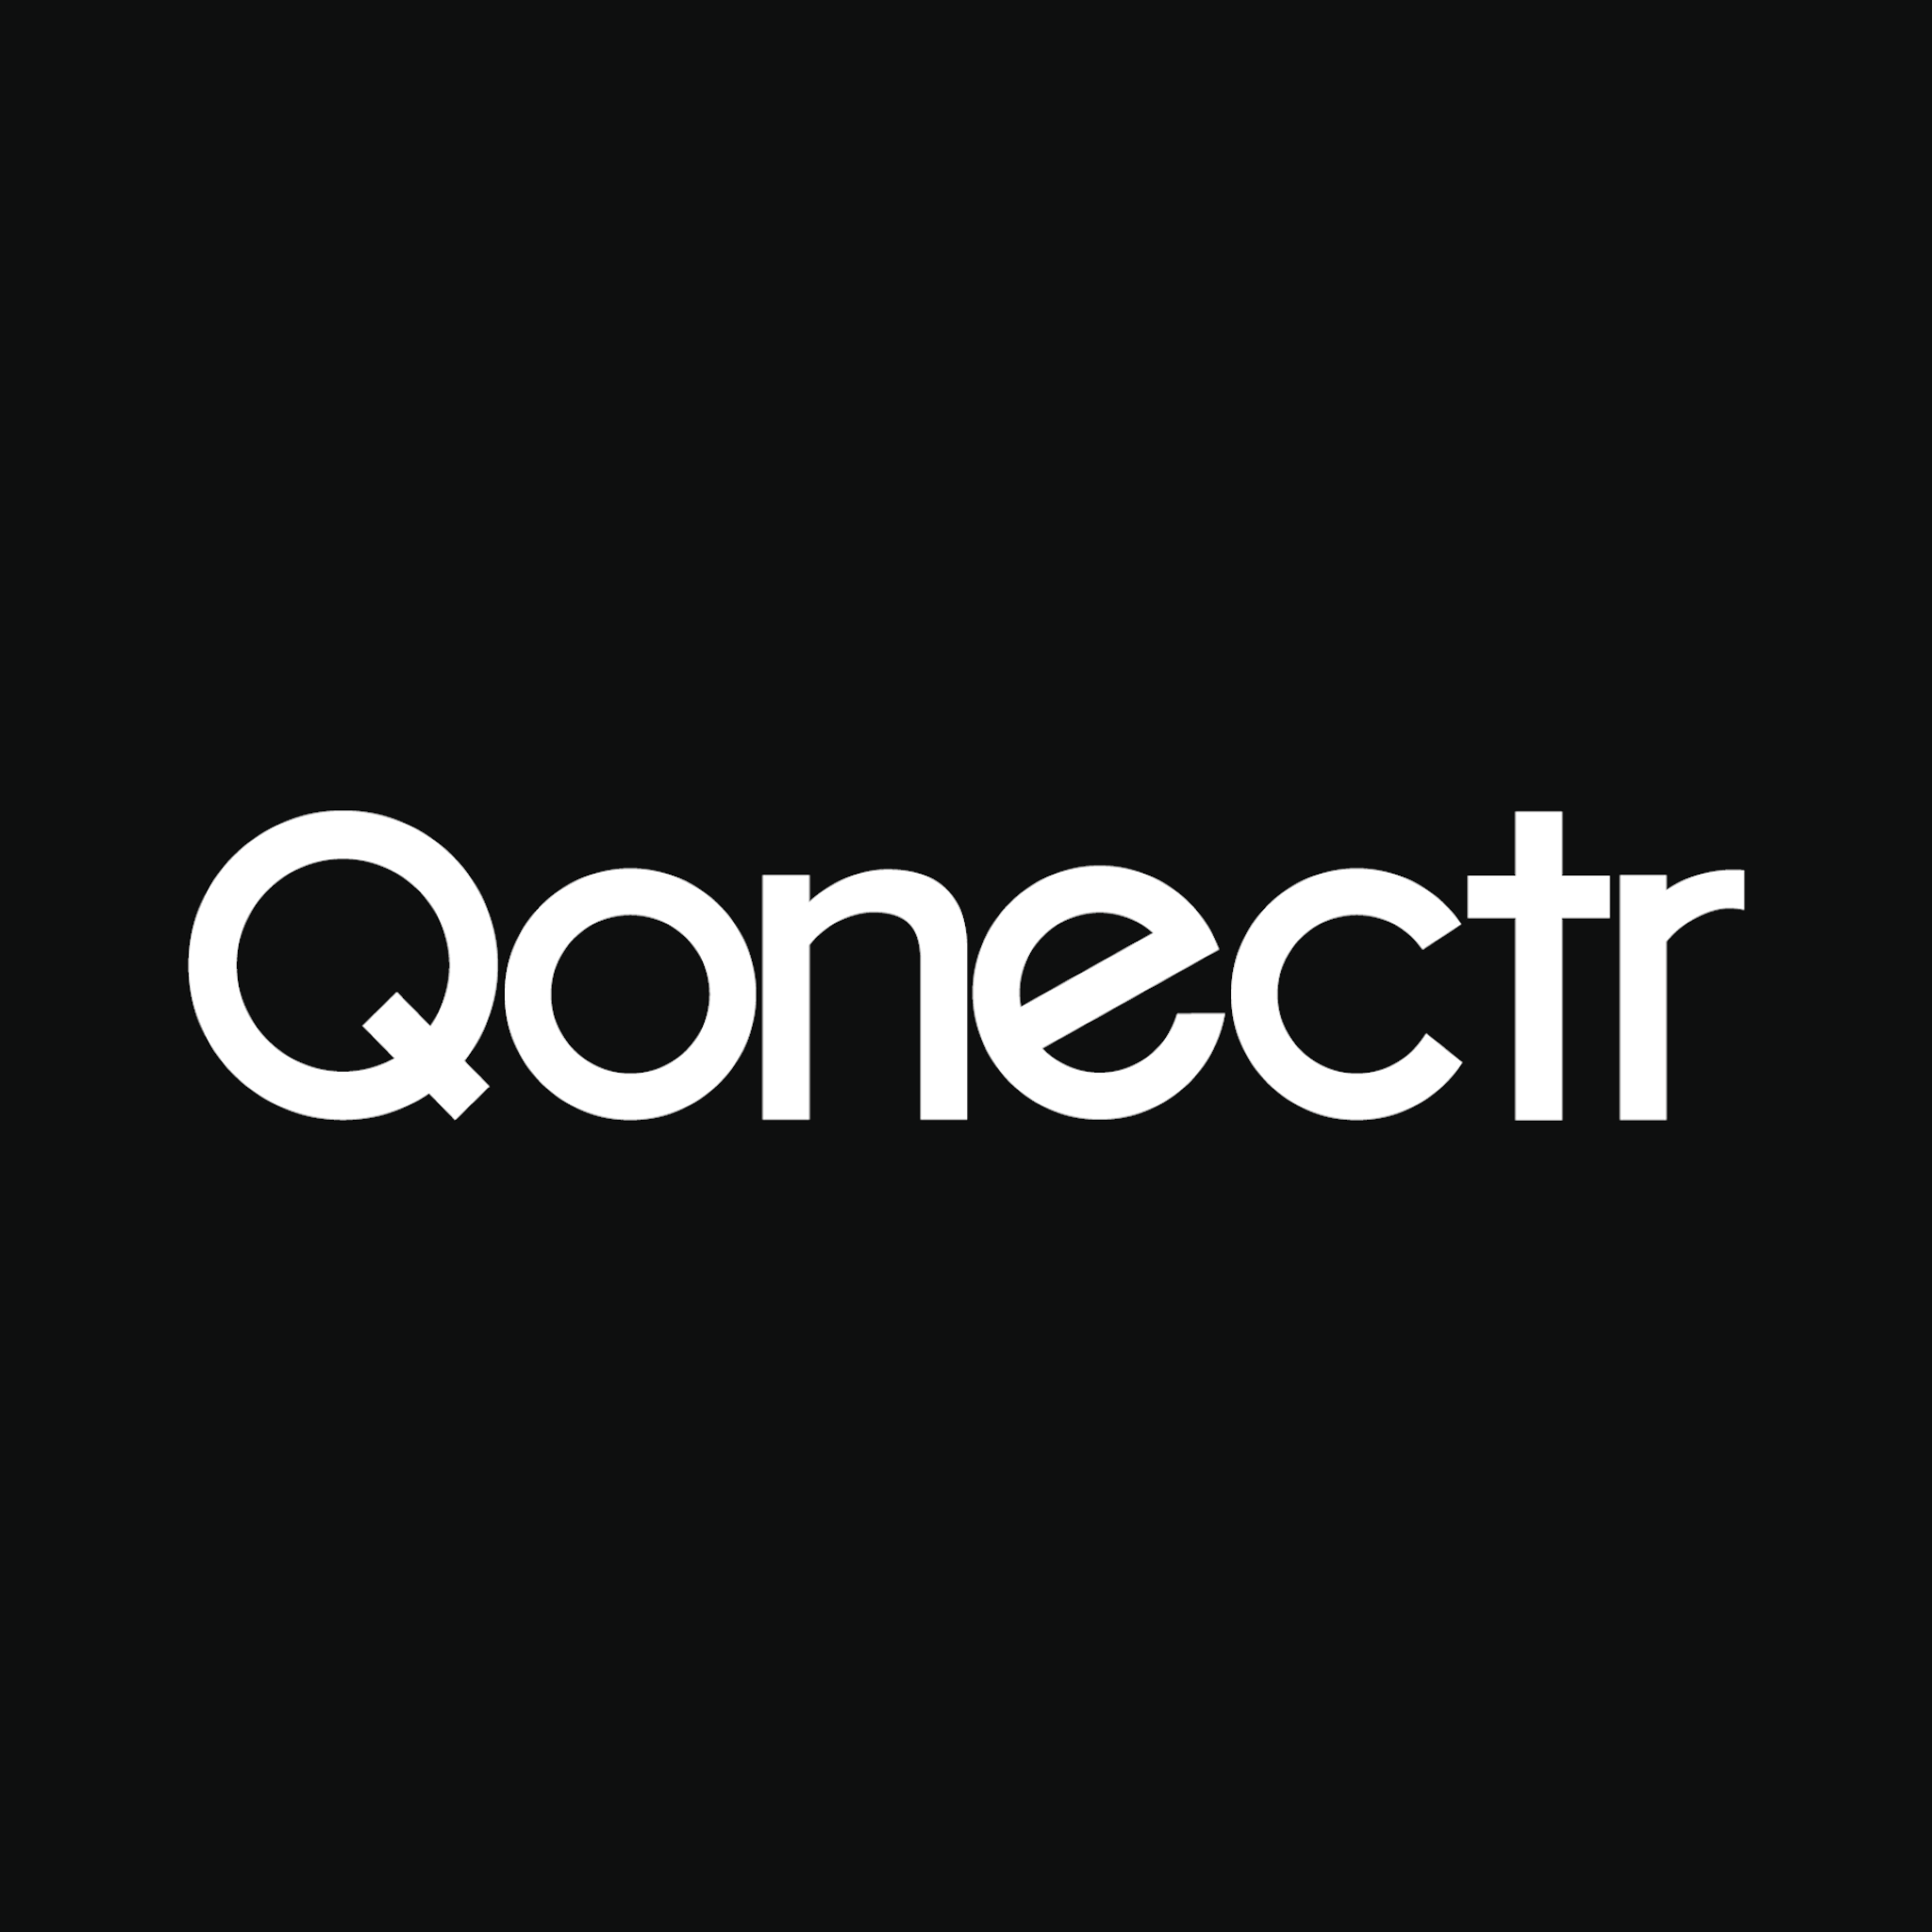 Qonectr image